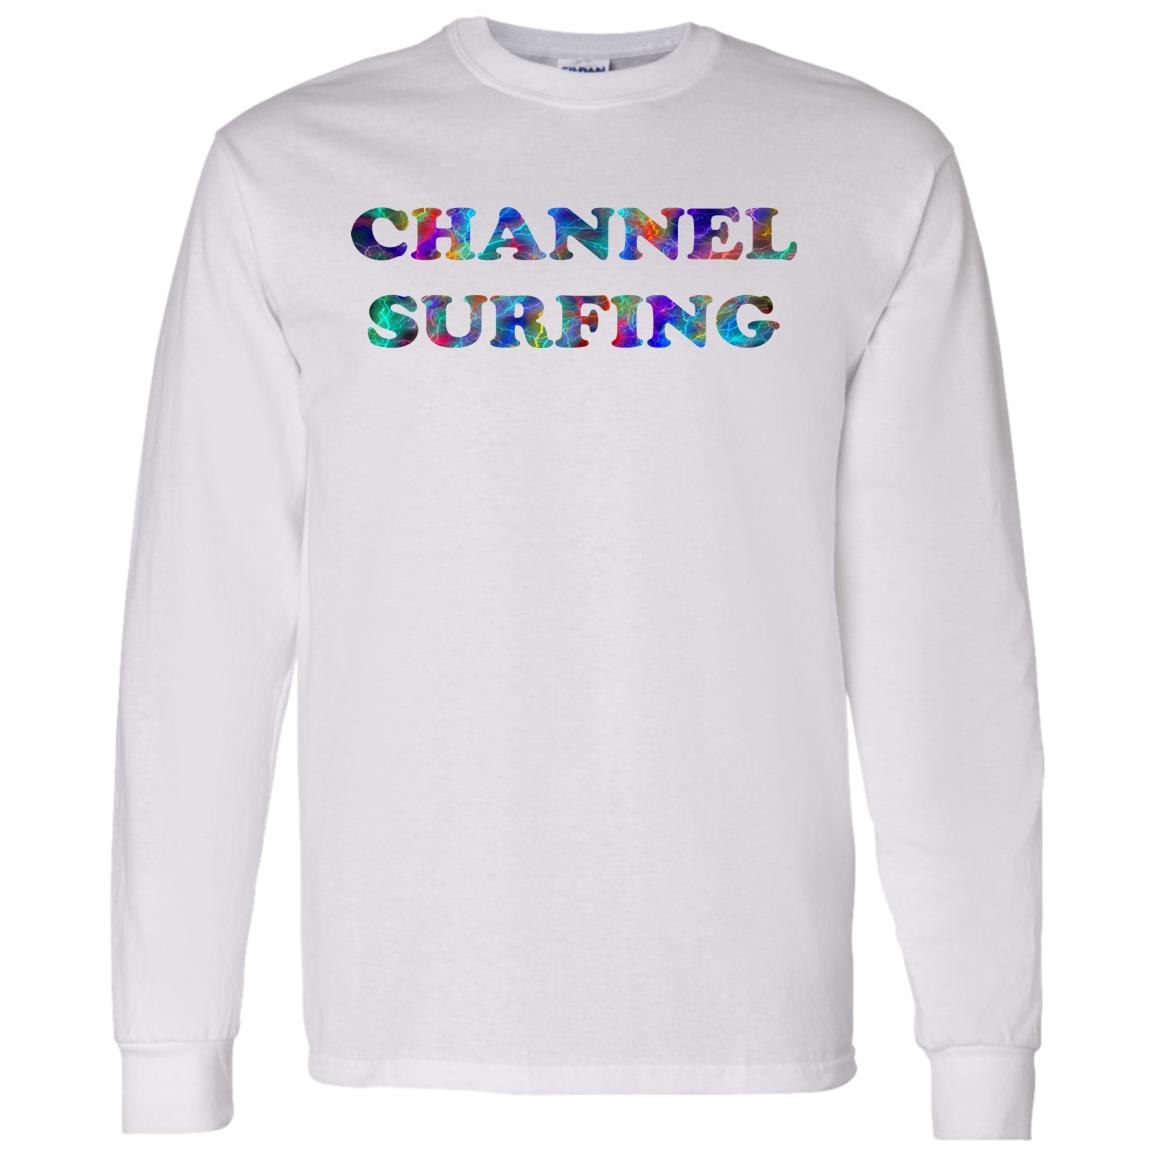 Channel Surfing LS T-Shirt